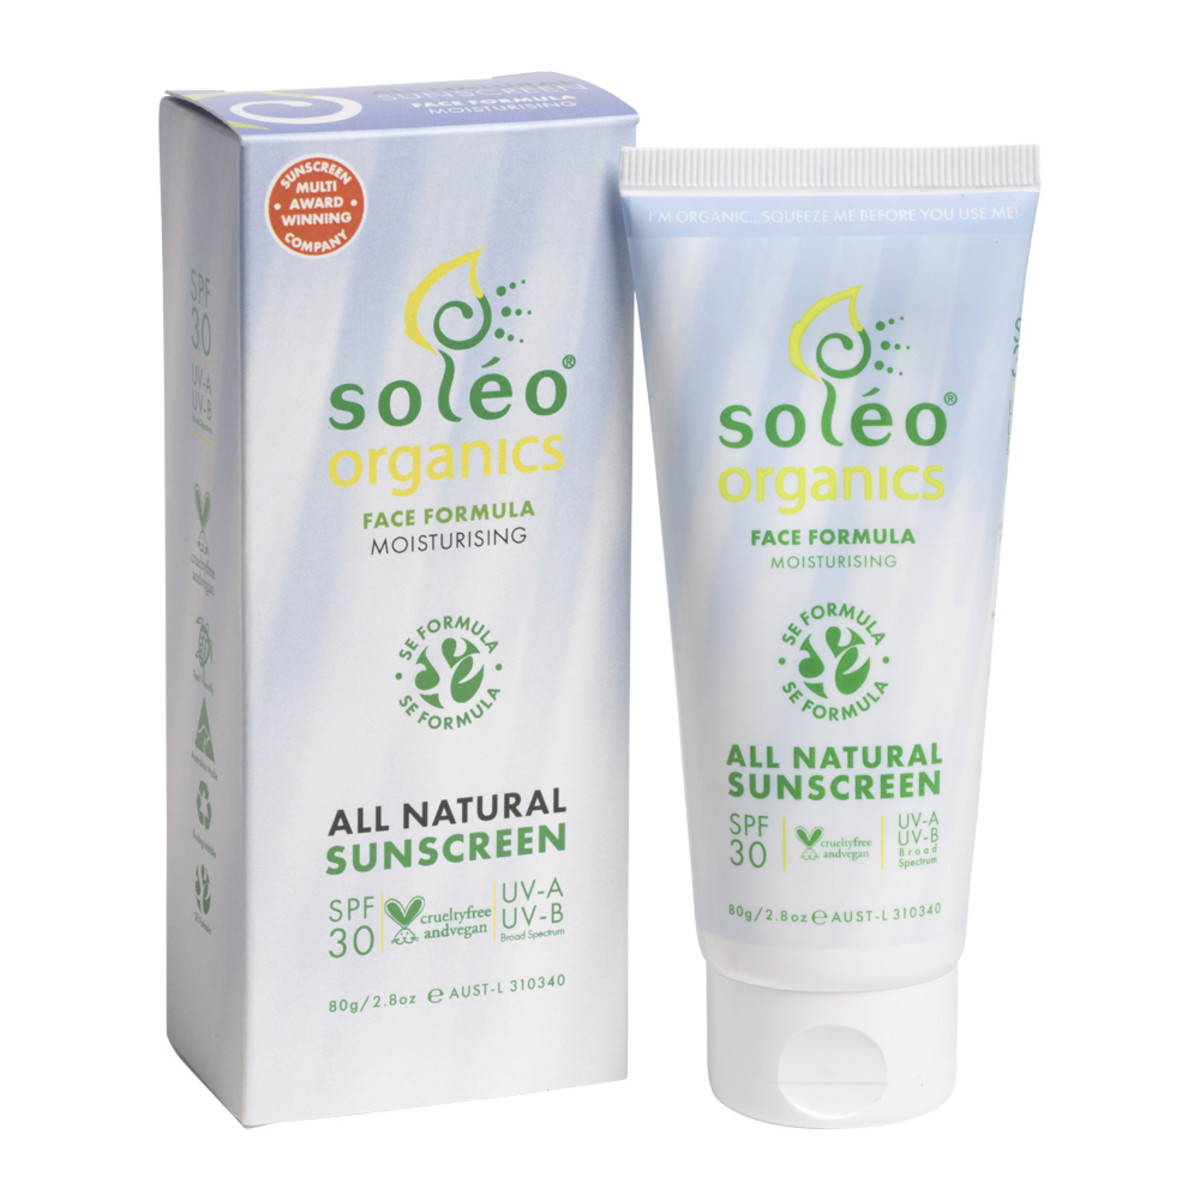 SOLEO ORGANICS - All Natural Sunscreen SPF30 Face Formula Moisturising